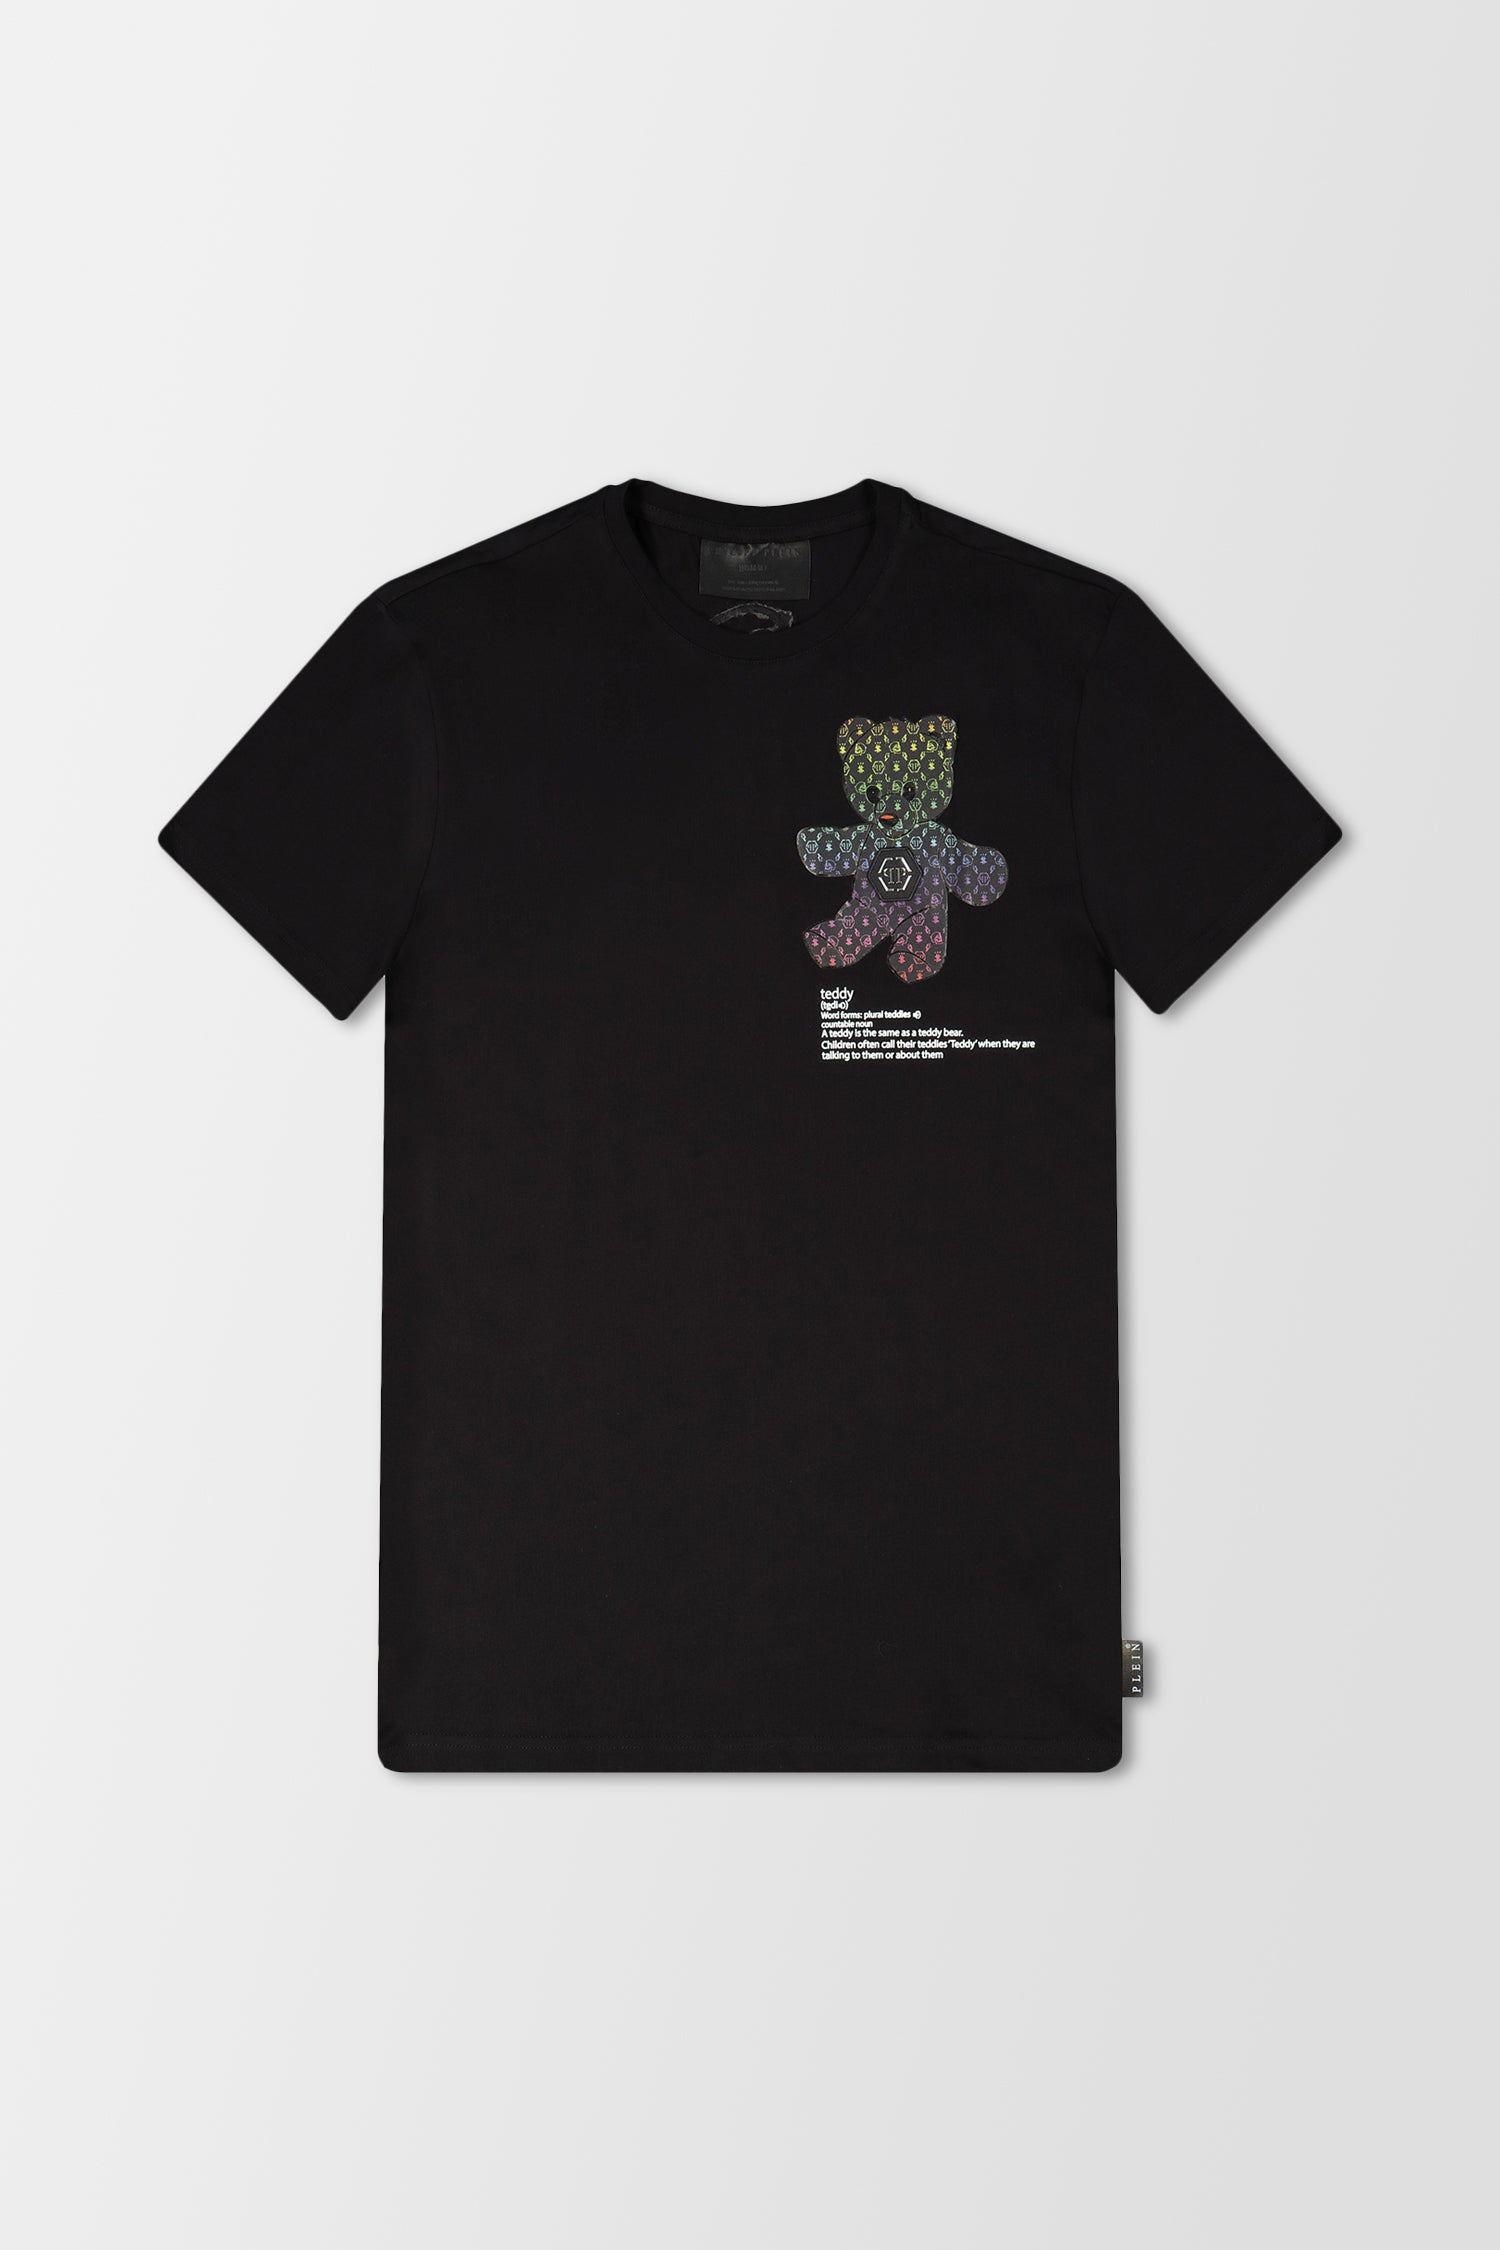 Philipp Plein Black/Multicolour Round Neck SS Teddy Bear T-Shirt